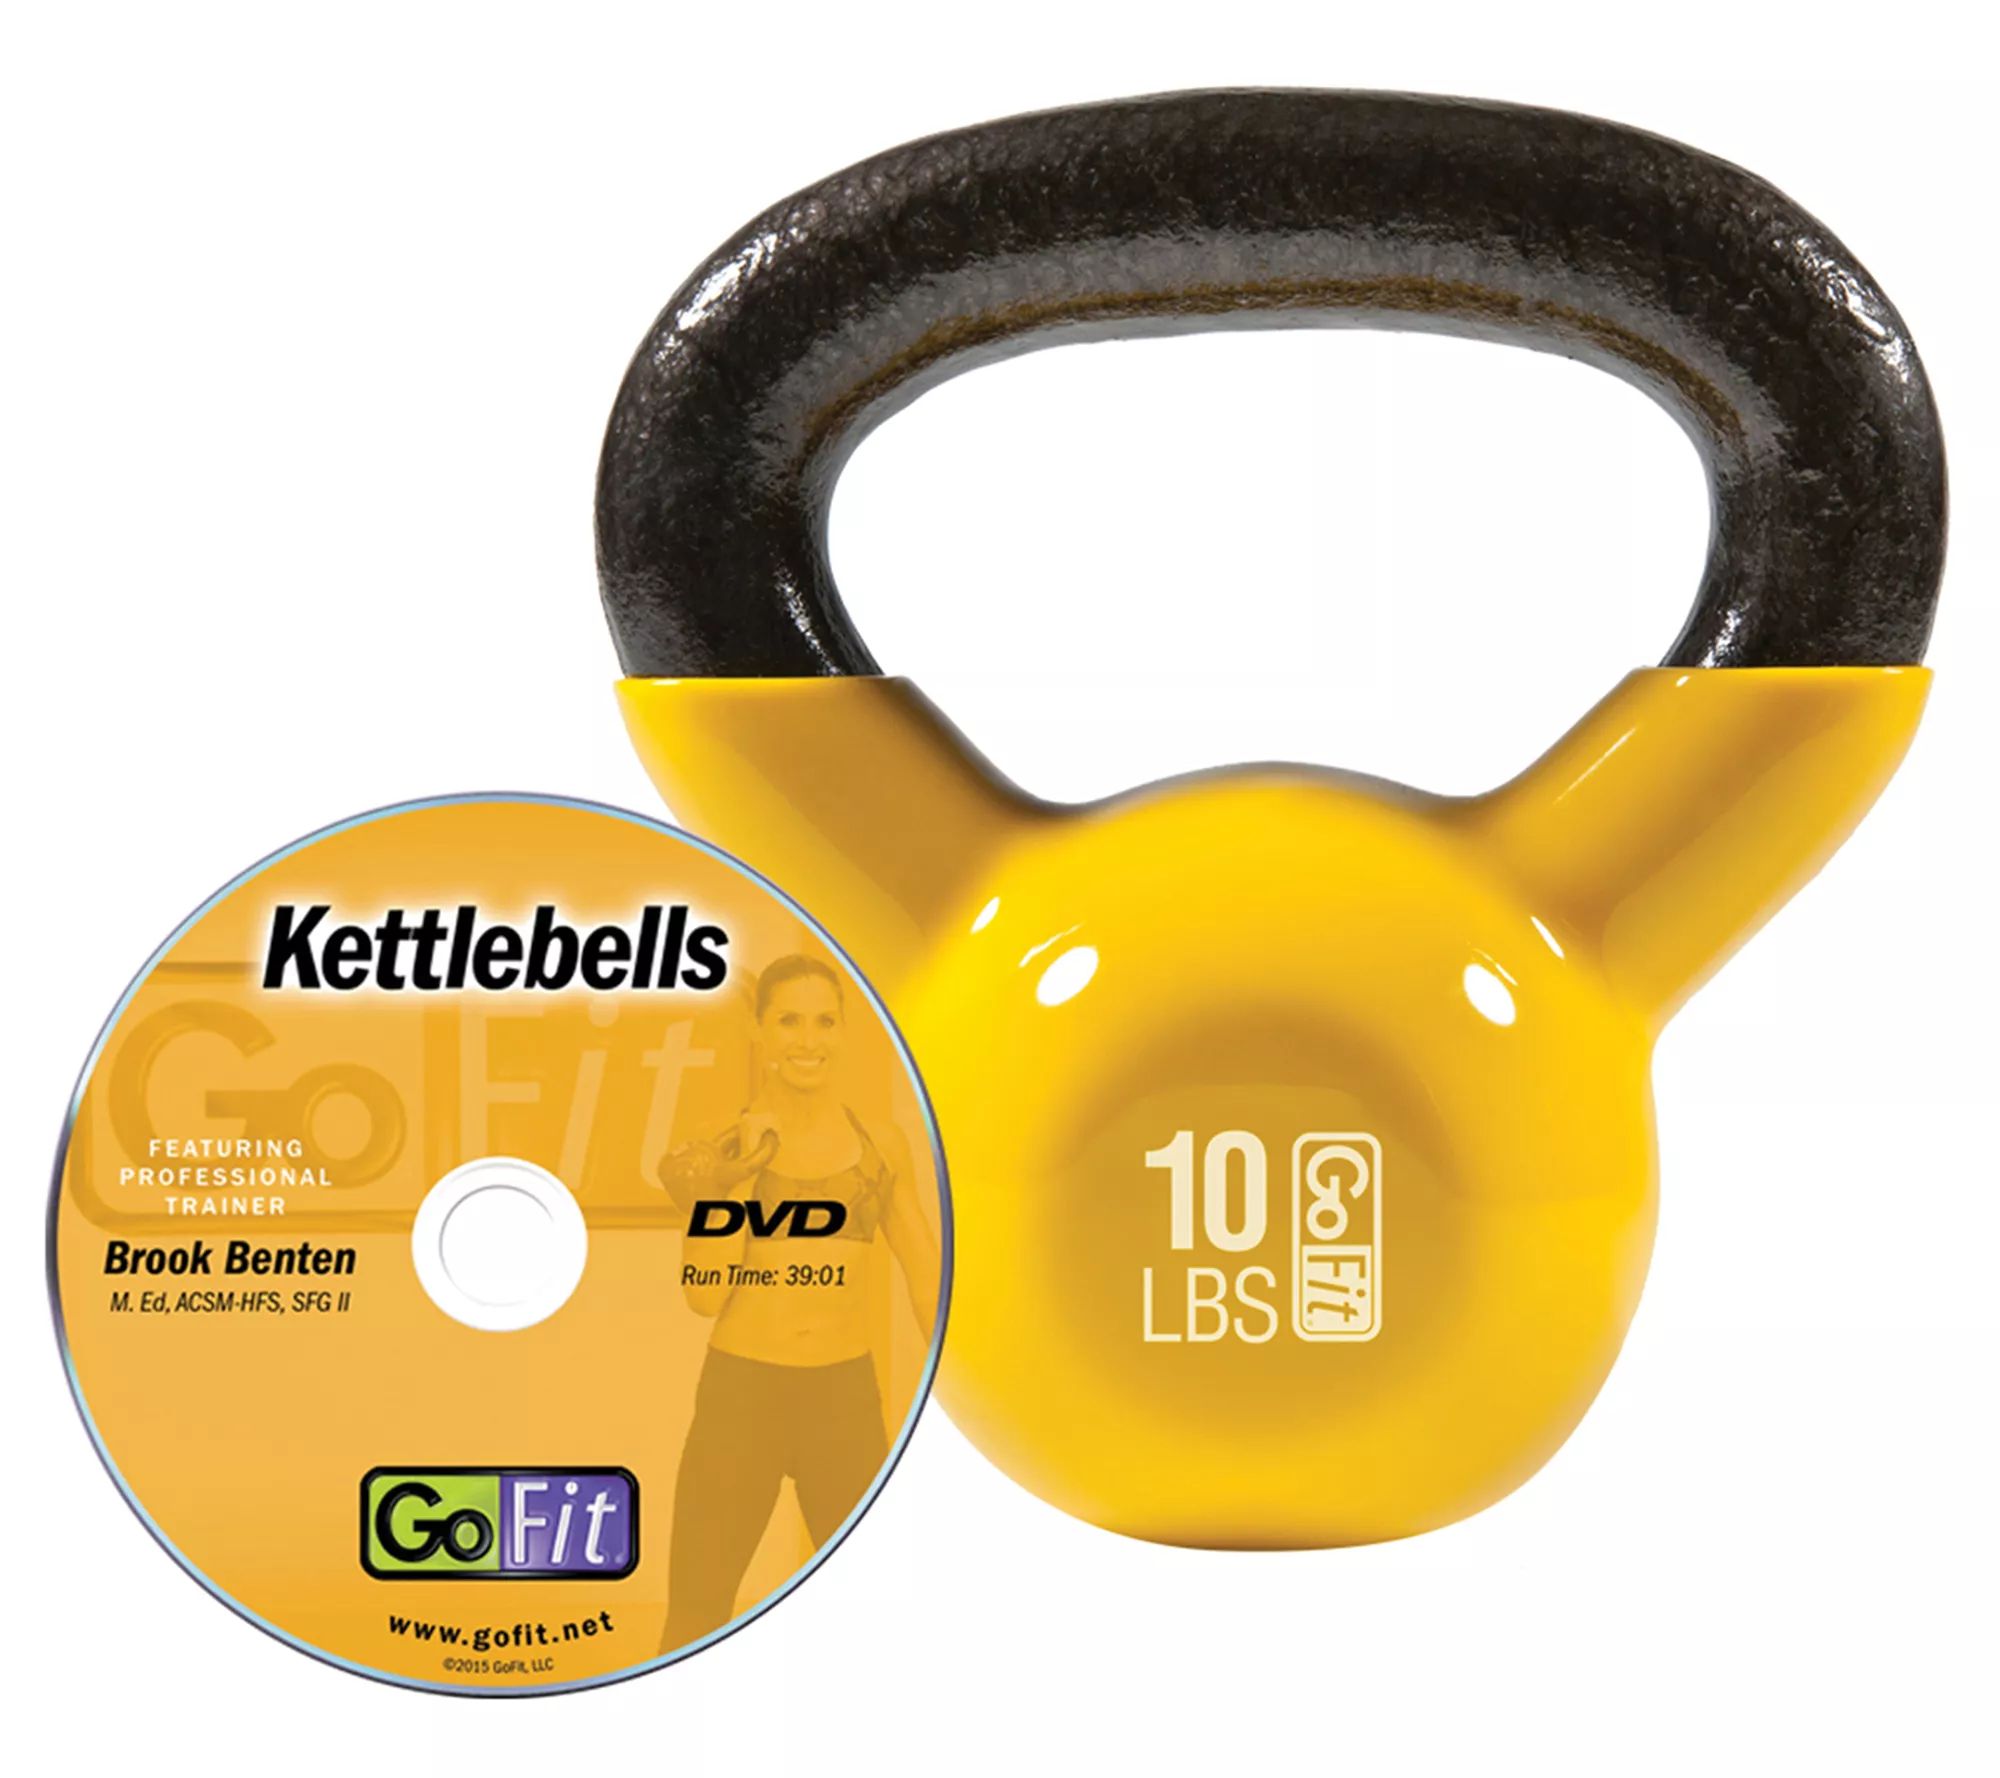 GoFit Contour Kettlebell 10 Pounds Yellow - QVC.com | QVC